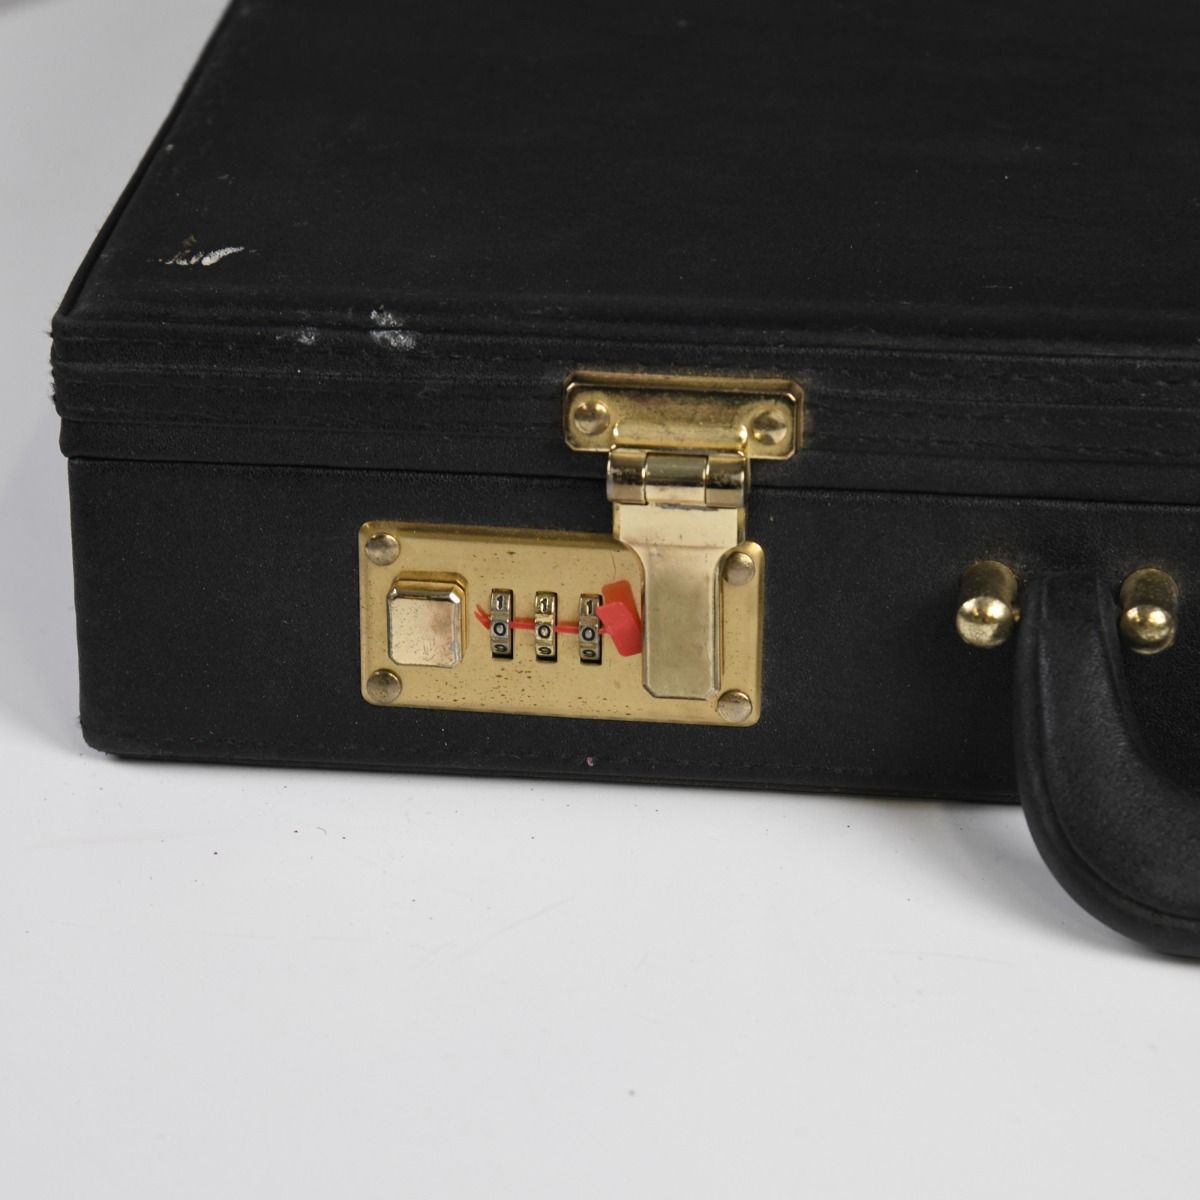 Vintage 1970s Matt Black Leather-Effect Briefcase